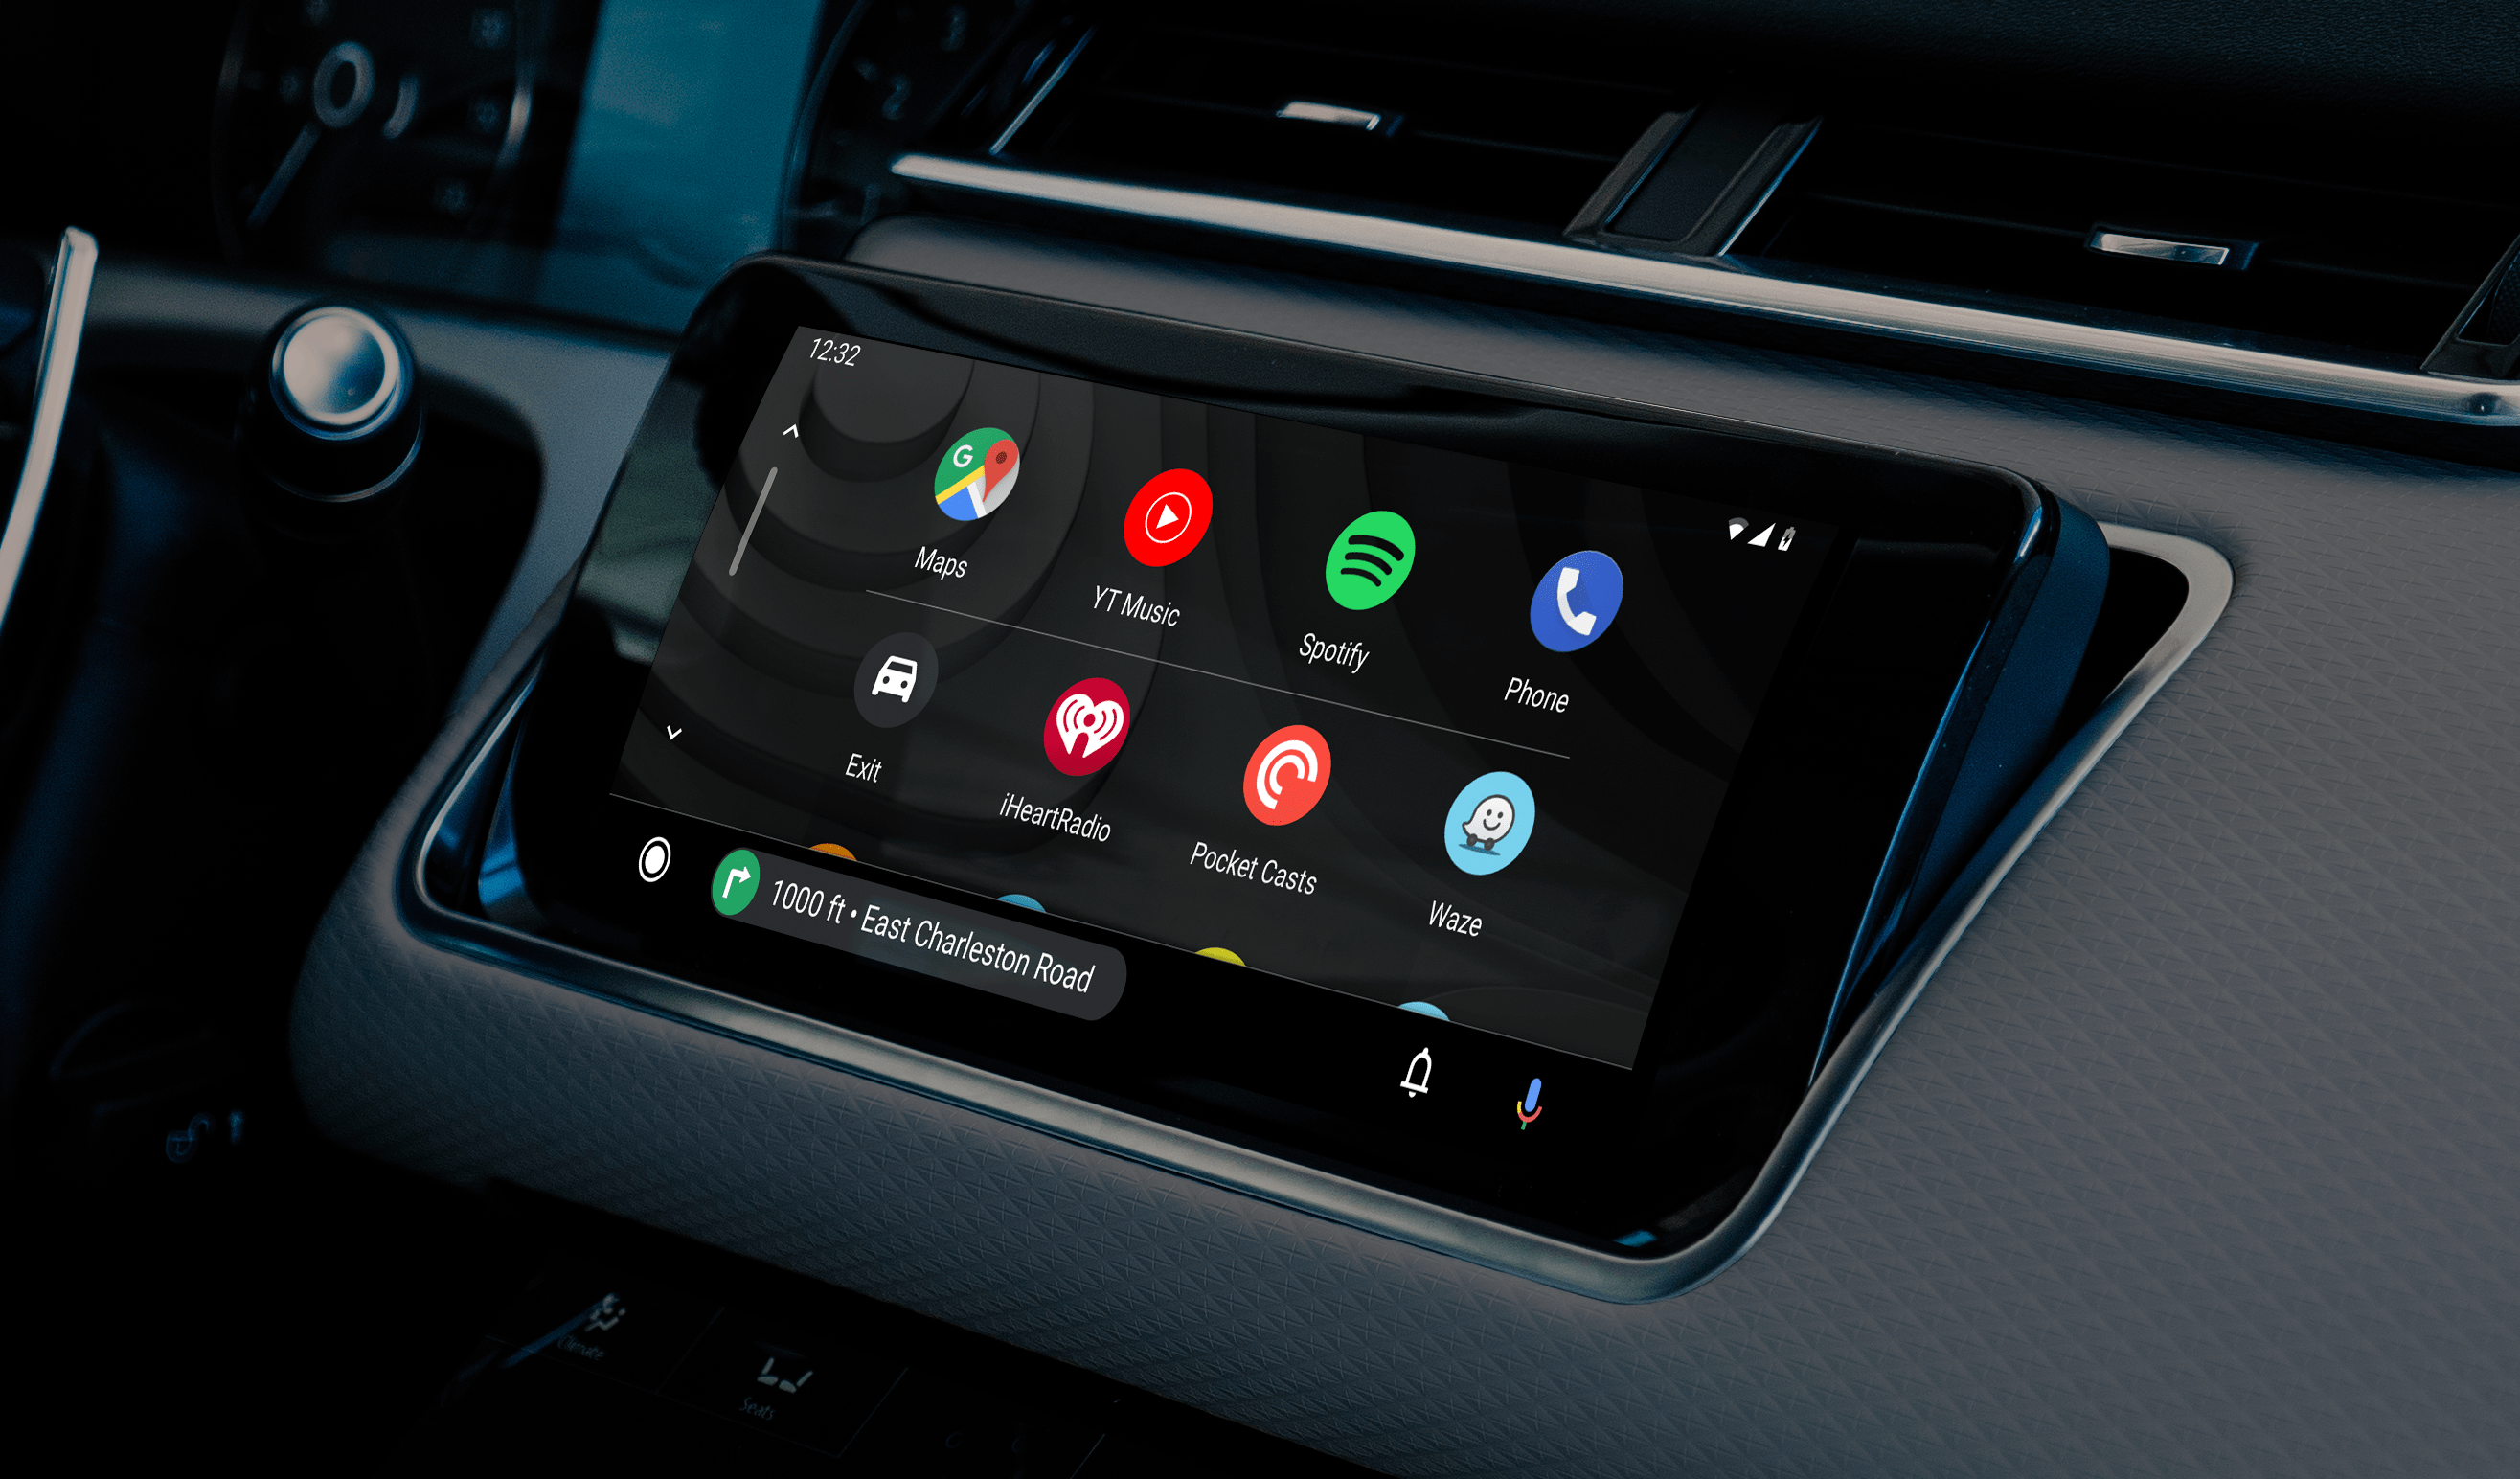 Androidauto. Андроид авто. Android для автомобиля. Андроидсвто. Android auto приложение.